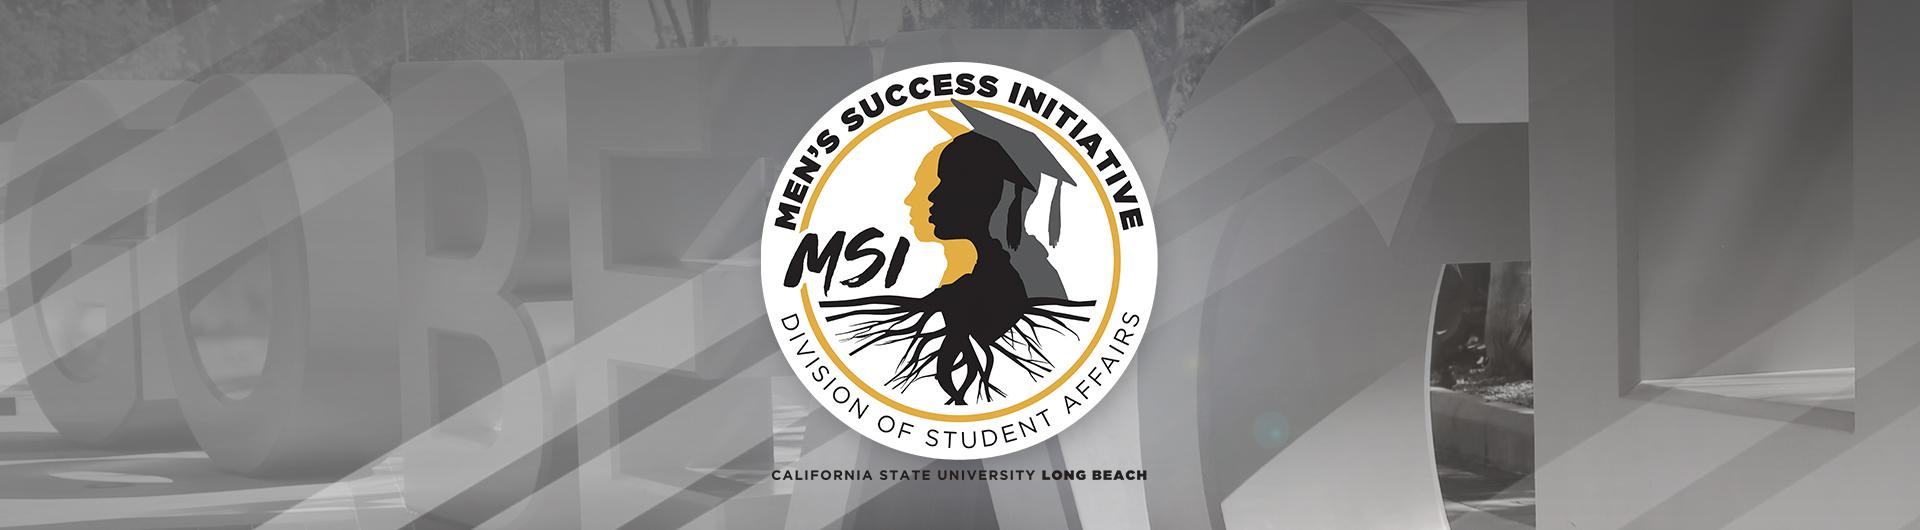 Division of Student Affairs - MSI